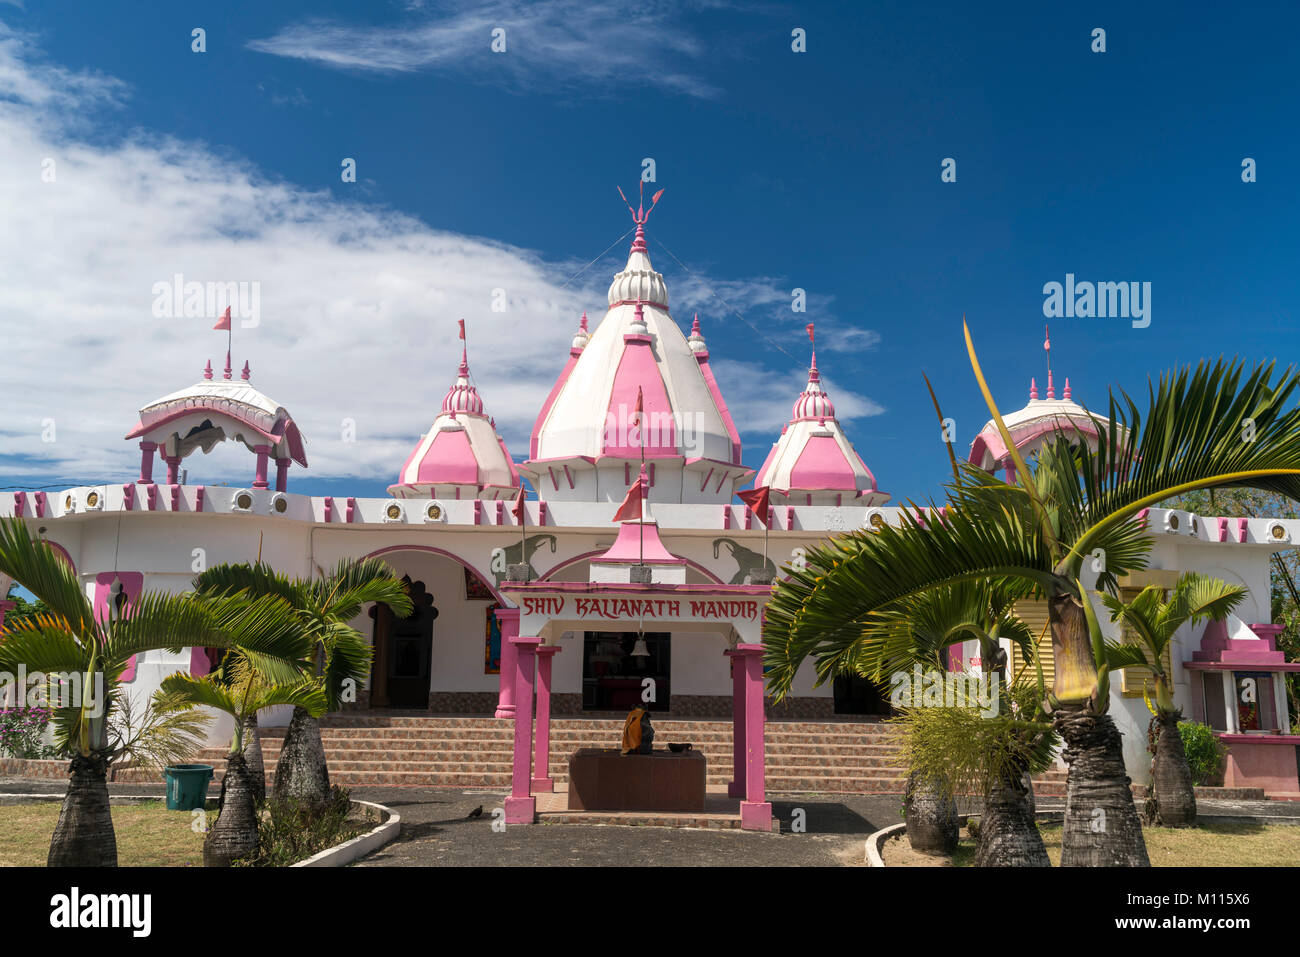 Hindutempel Shiv Kalyanath Mandir, Grand Baie, Mauritius, Afrika  | Shiv Kalyanath Mandir hindu temple,  Grand Baie,, Mauritius, Africa Stock Photo